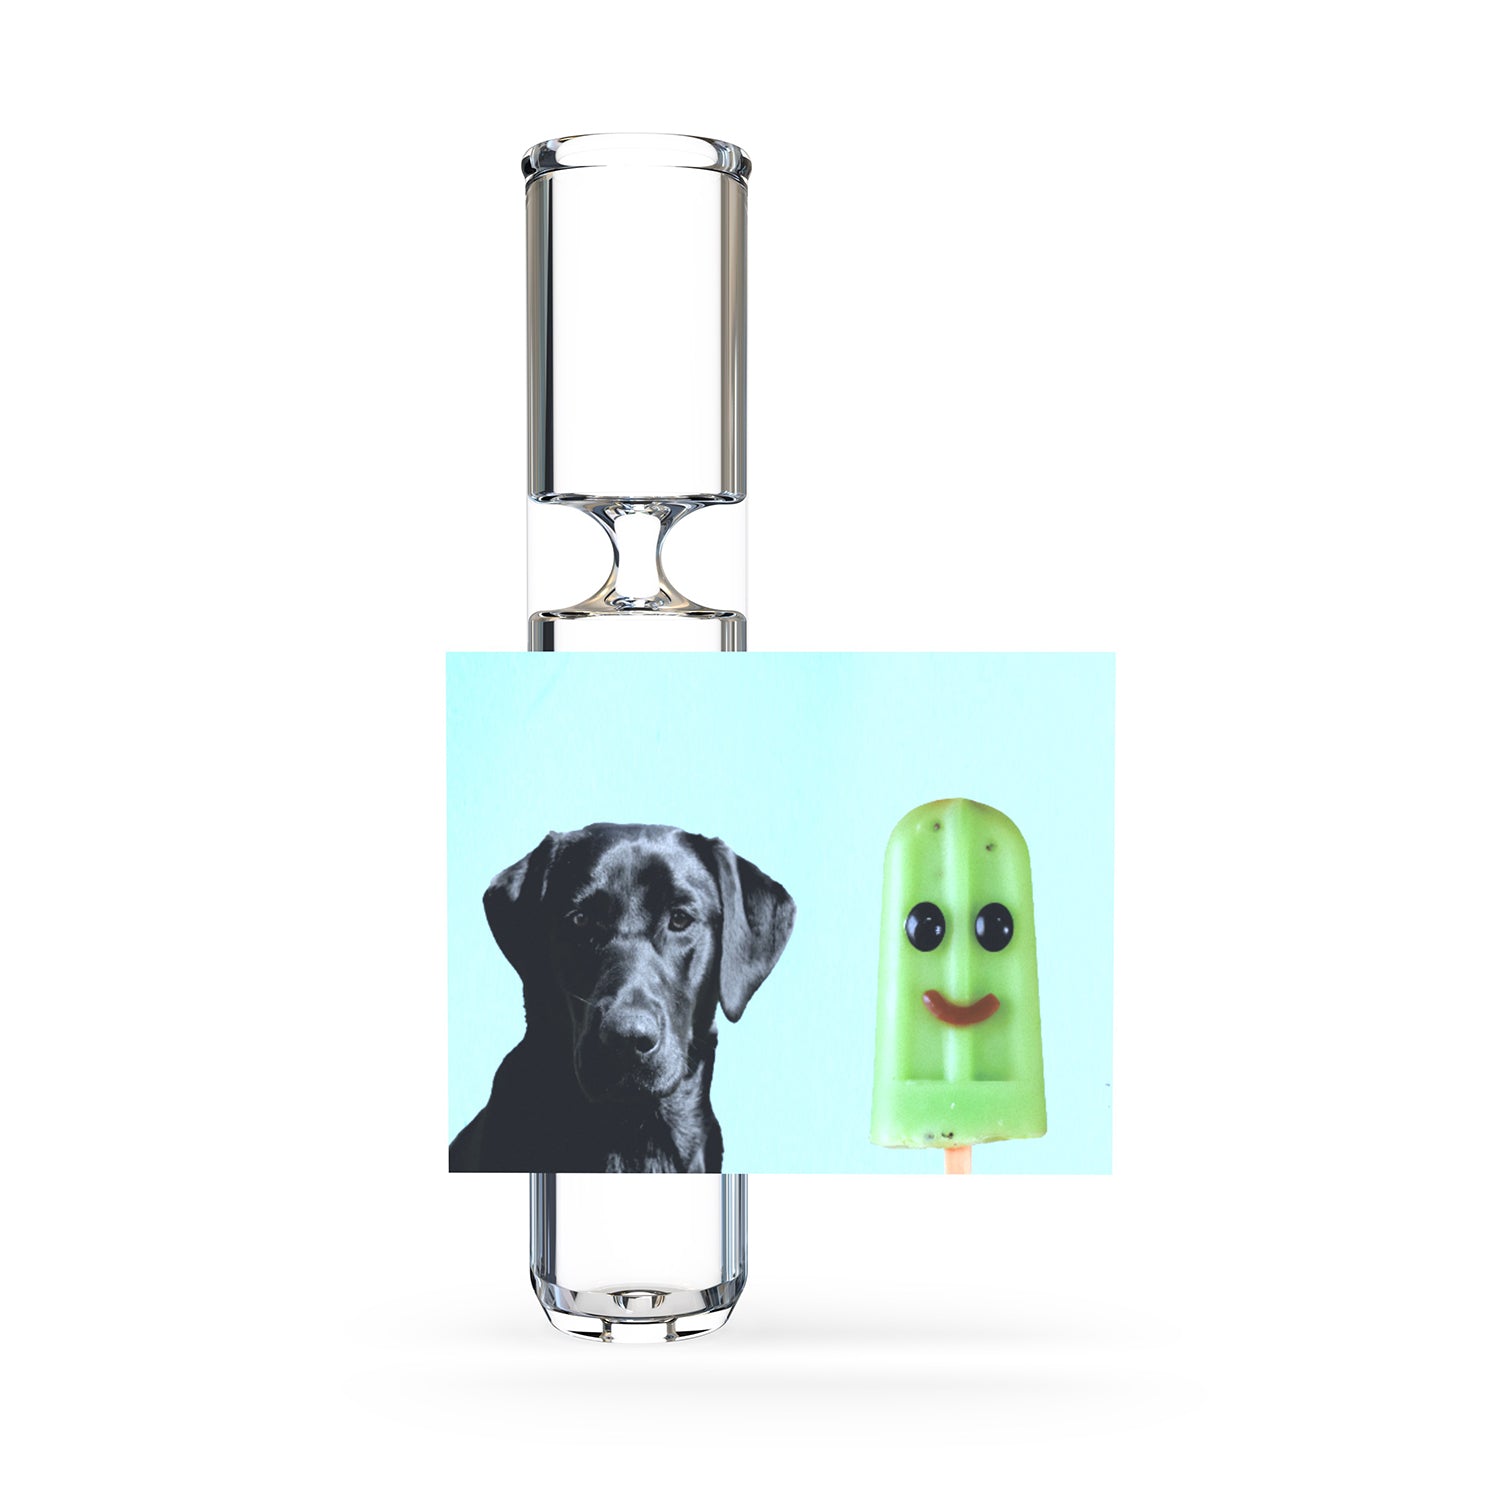 Dog themed glass chillum pipe.